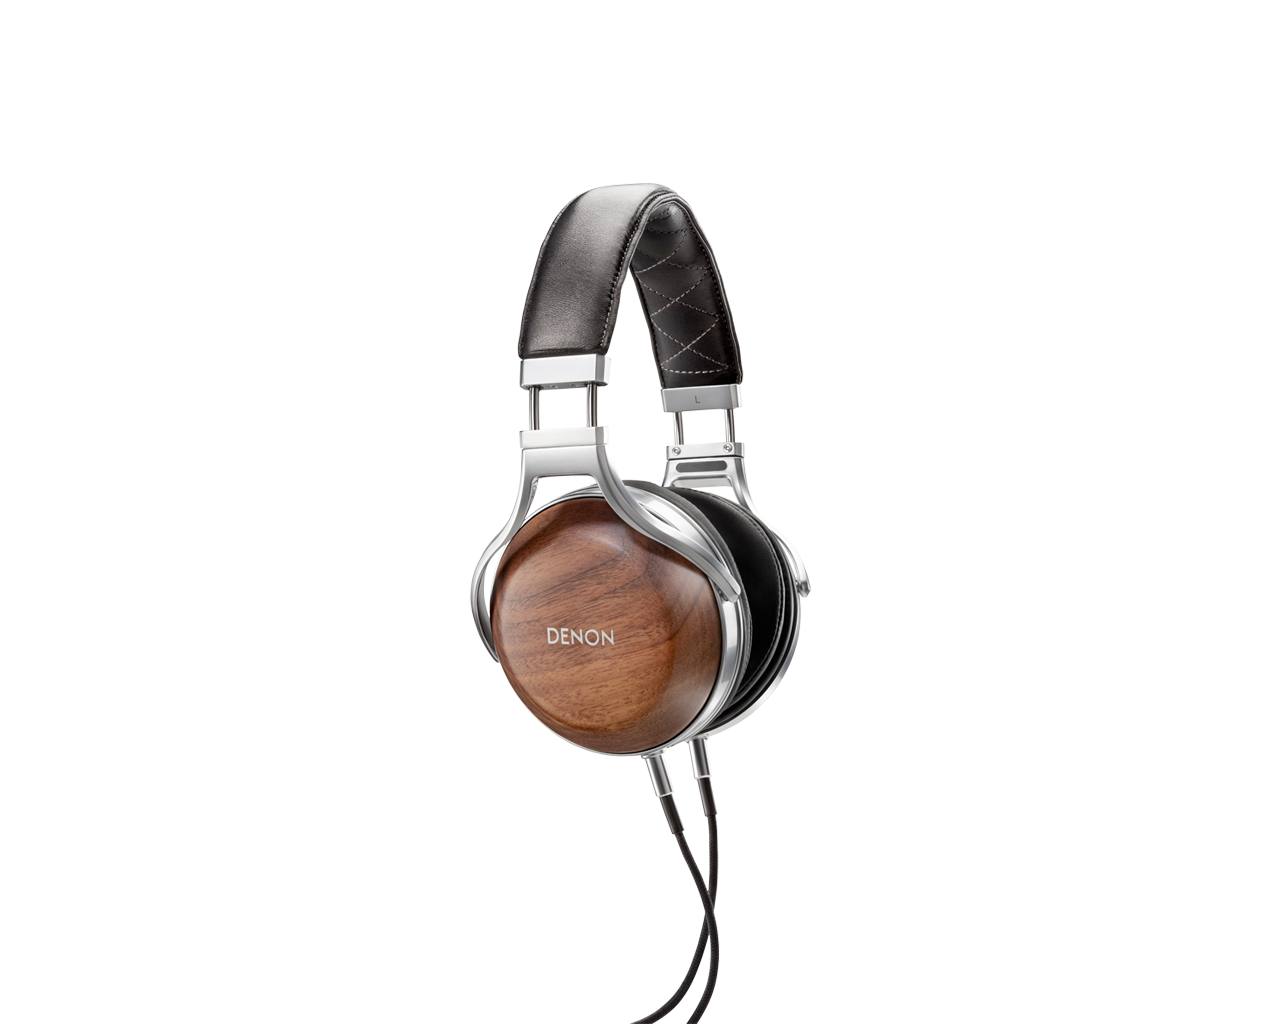 Denon AH-D7200 Reference Over-Ear Headphones